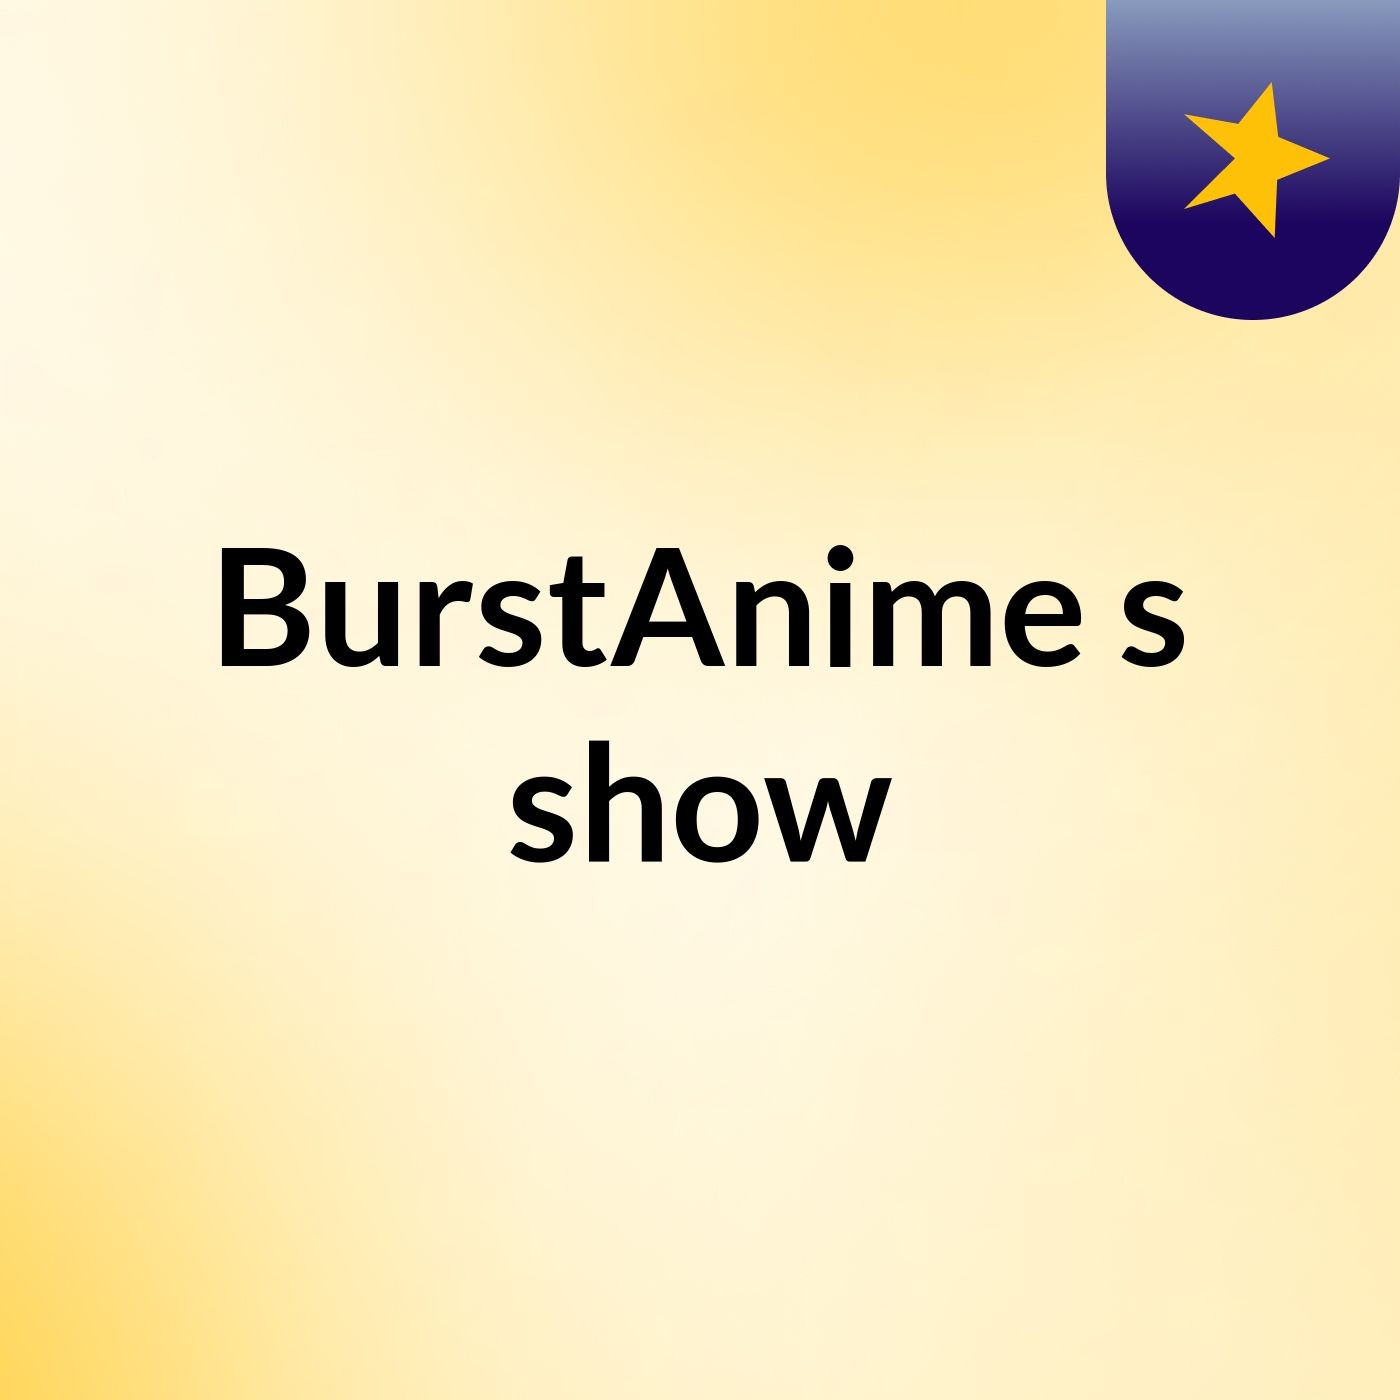 BurstAnime's show